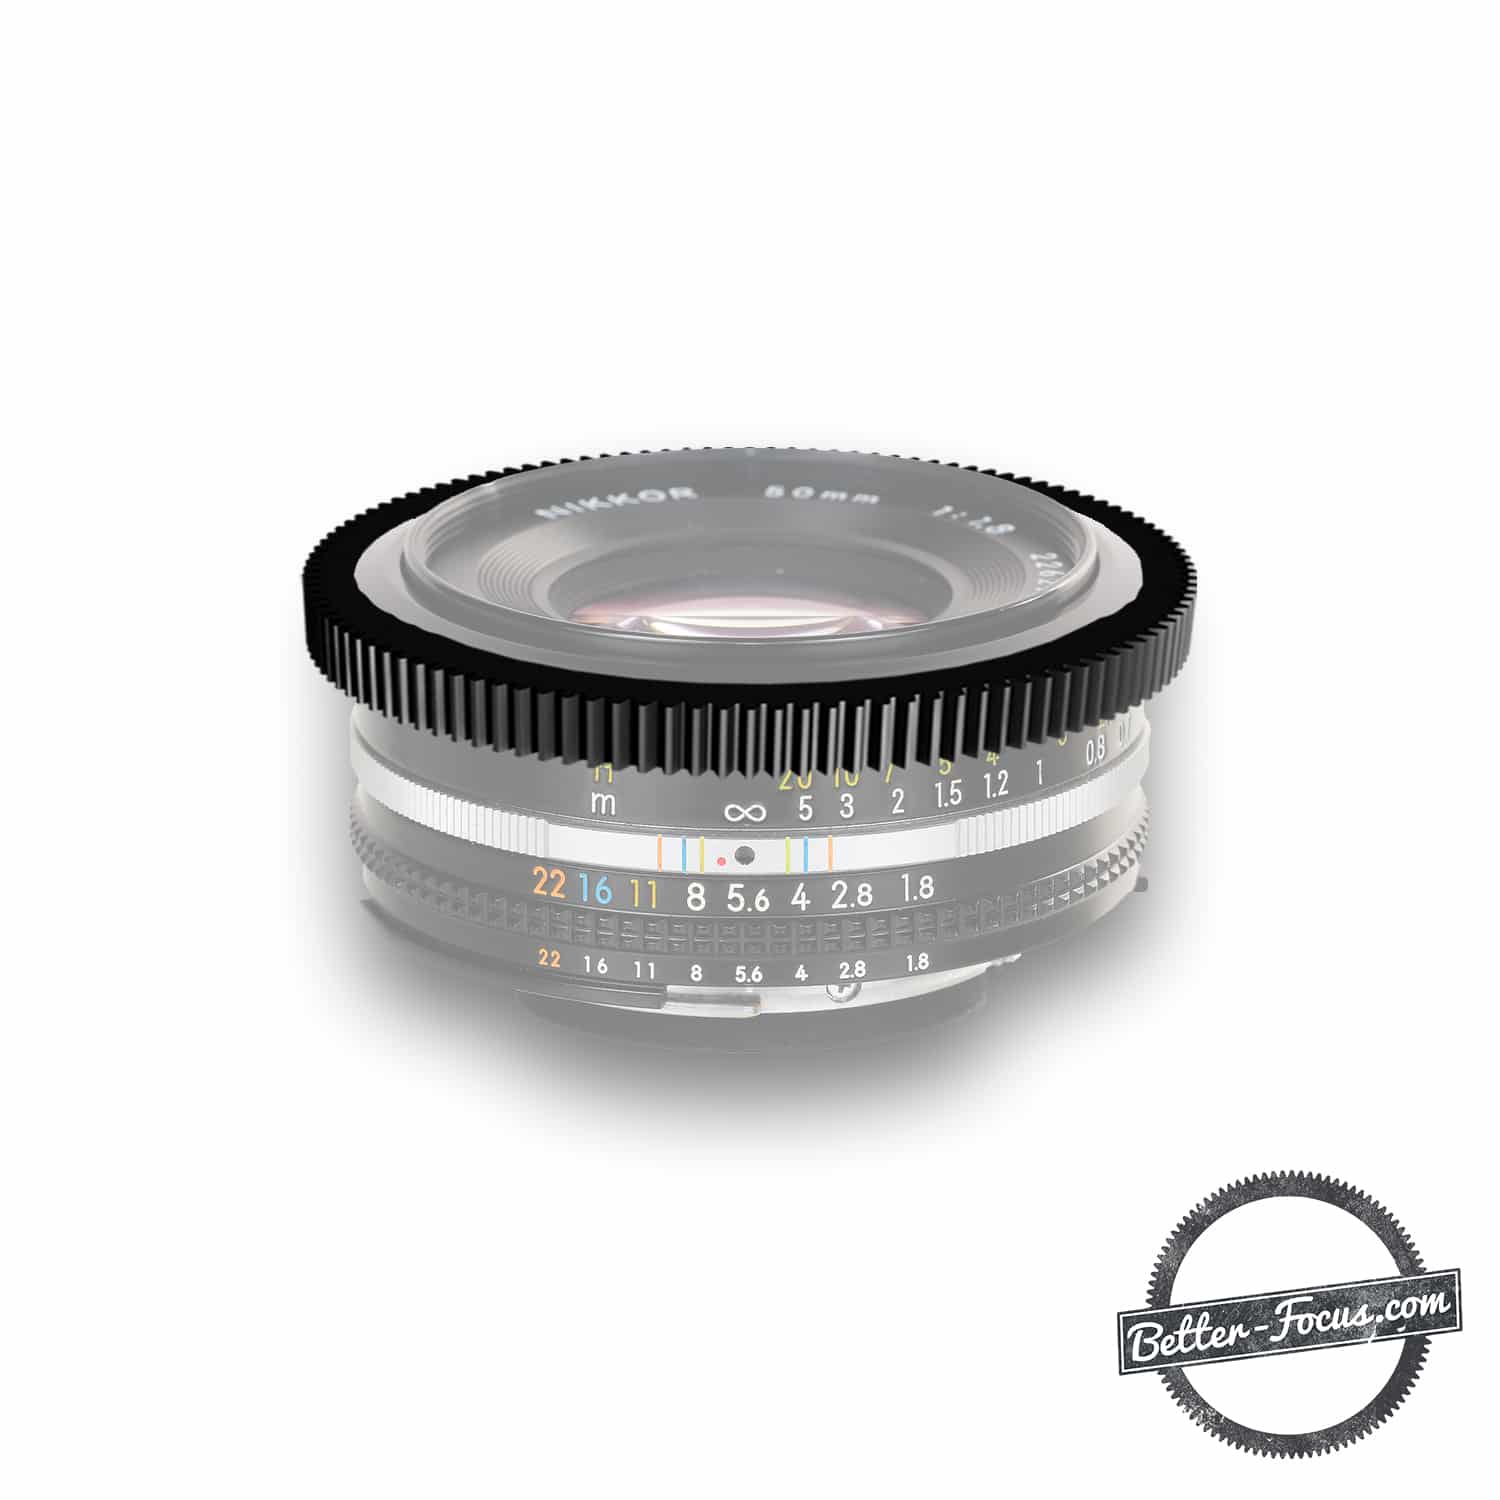 Follow Focus Gear for NIKON NIKKOR 50MM F1.8 AI-S  lens